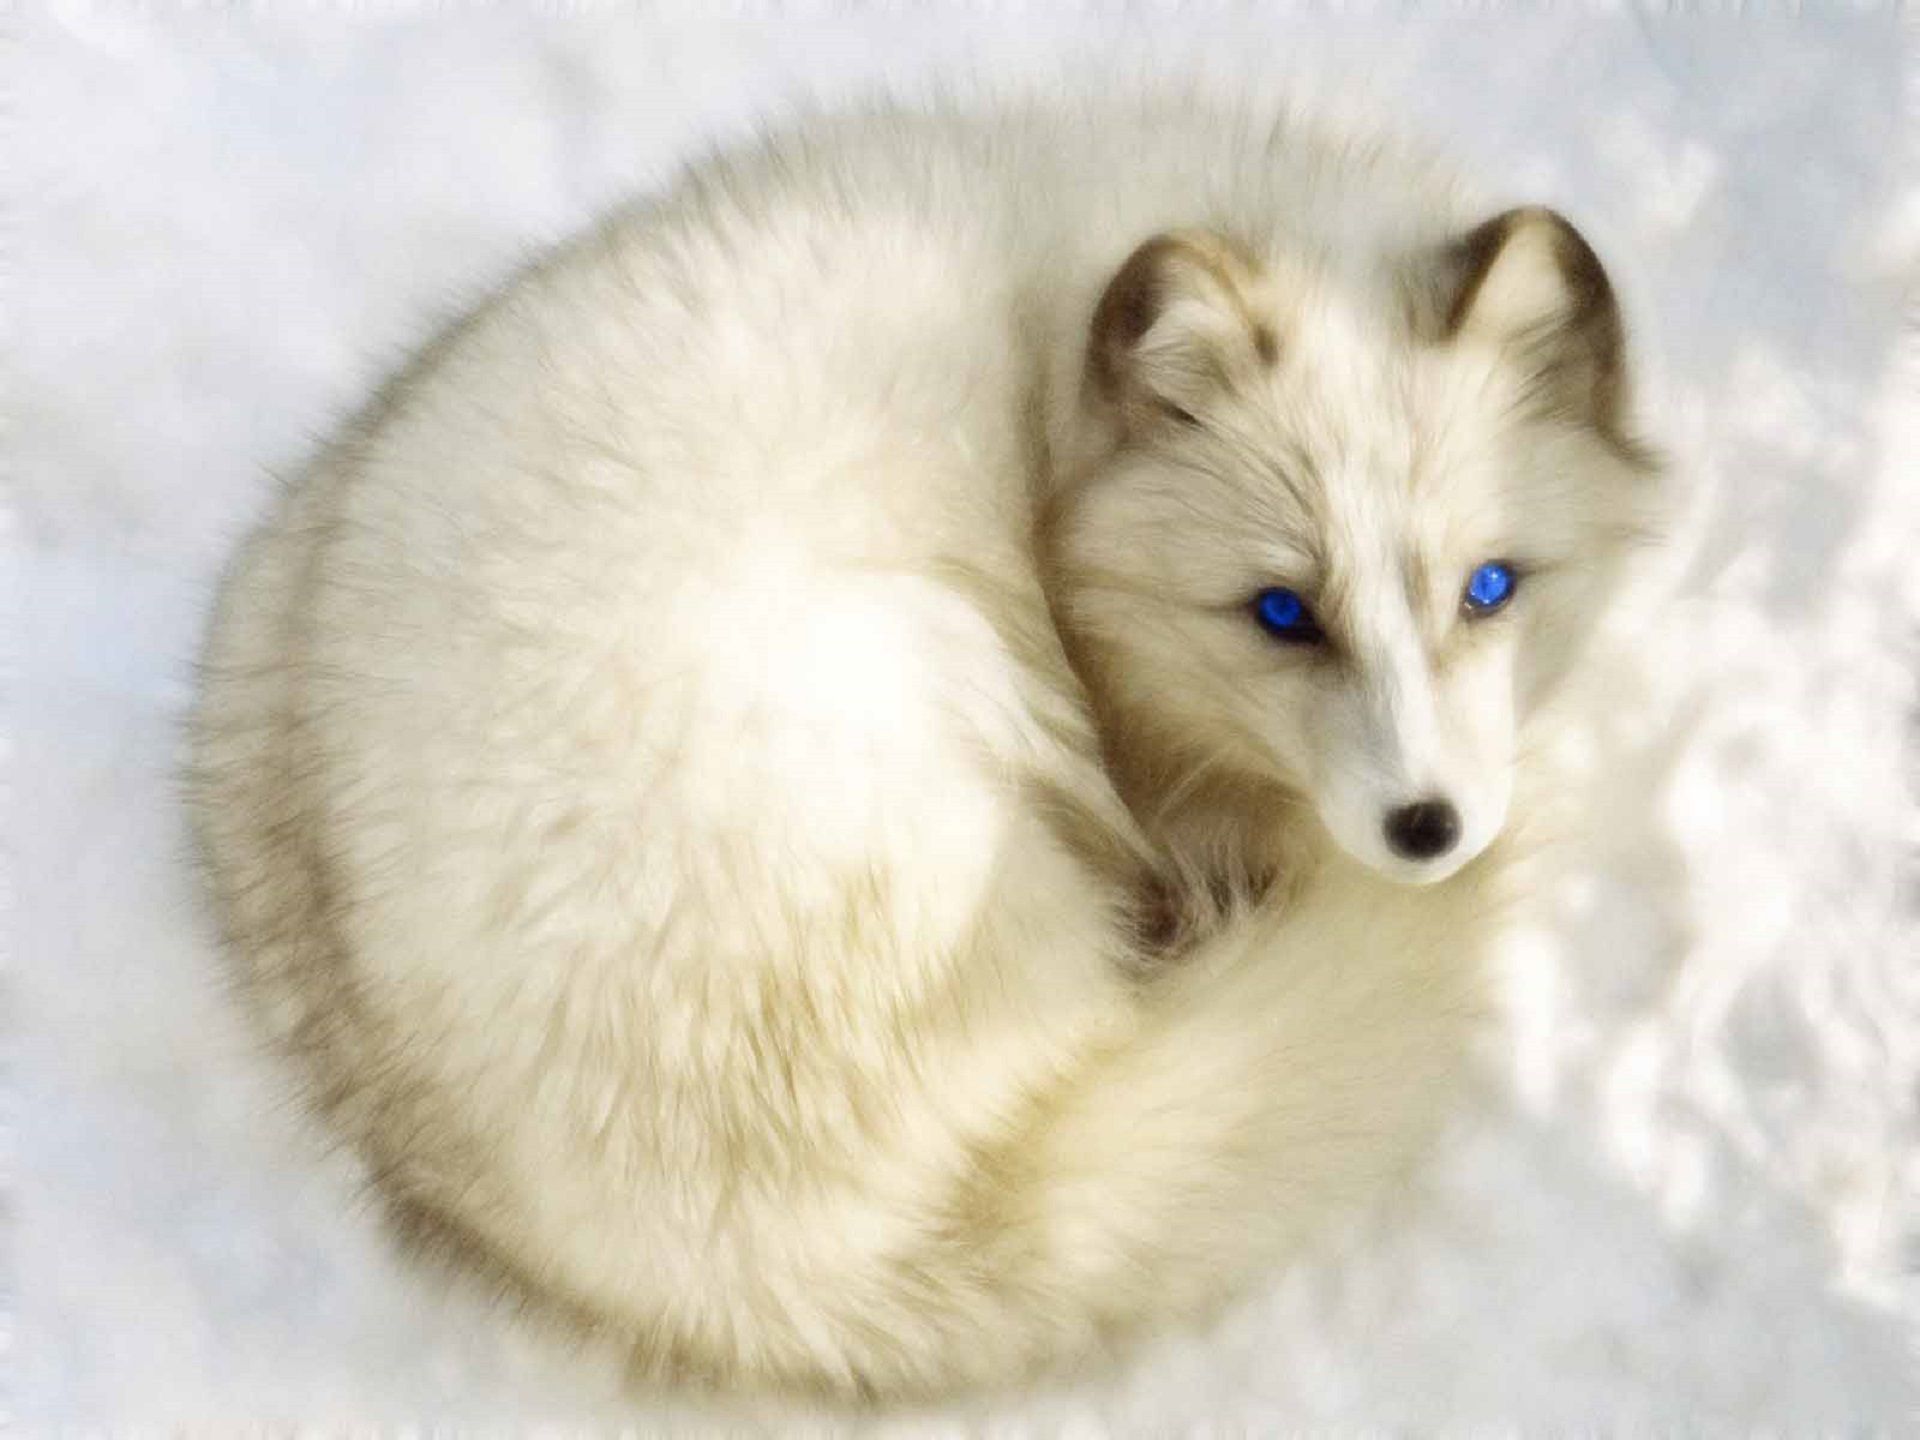 Arctic Fox Wallpaper Image Photo Picture Background. Pet fox, Arctic fox, Foxes photography